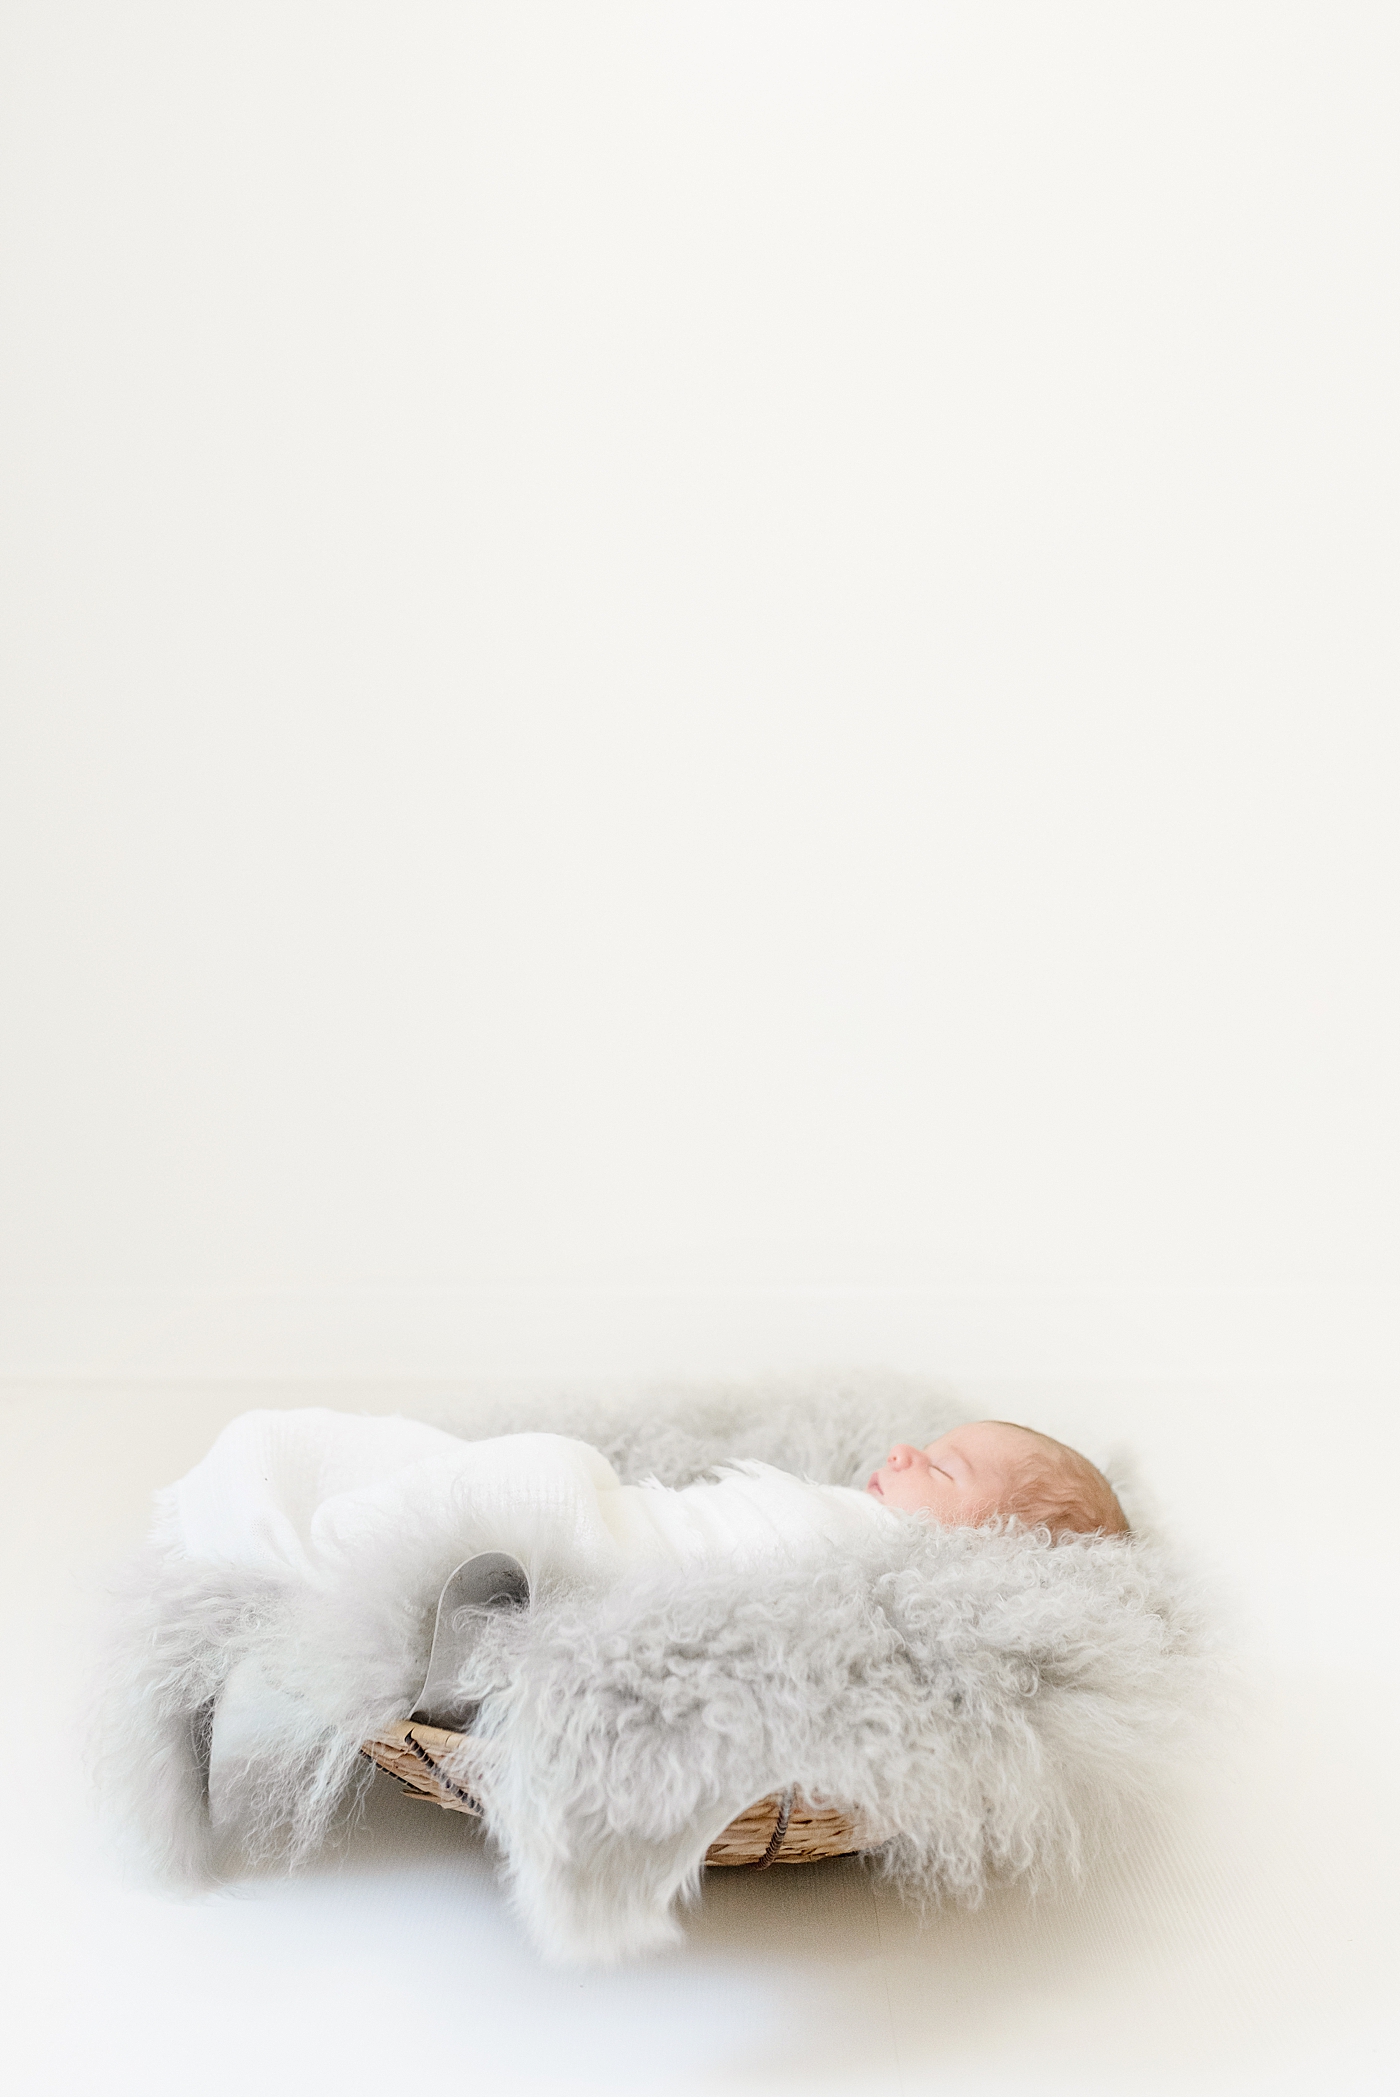 Newborn in a basket with fluffy gray blanket | Photo by North Carolina Newborn Photographer Anna Wisjo 